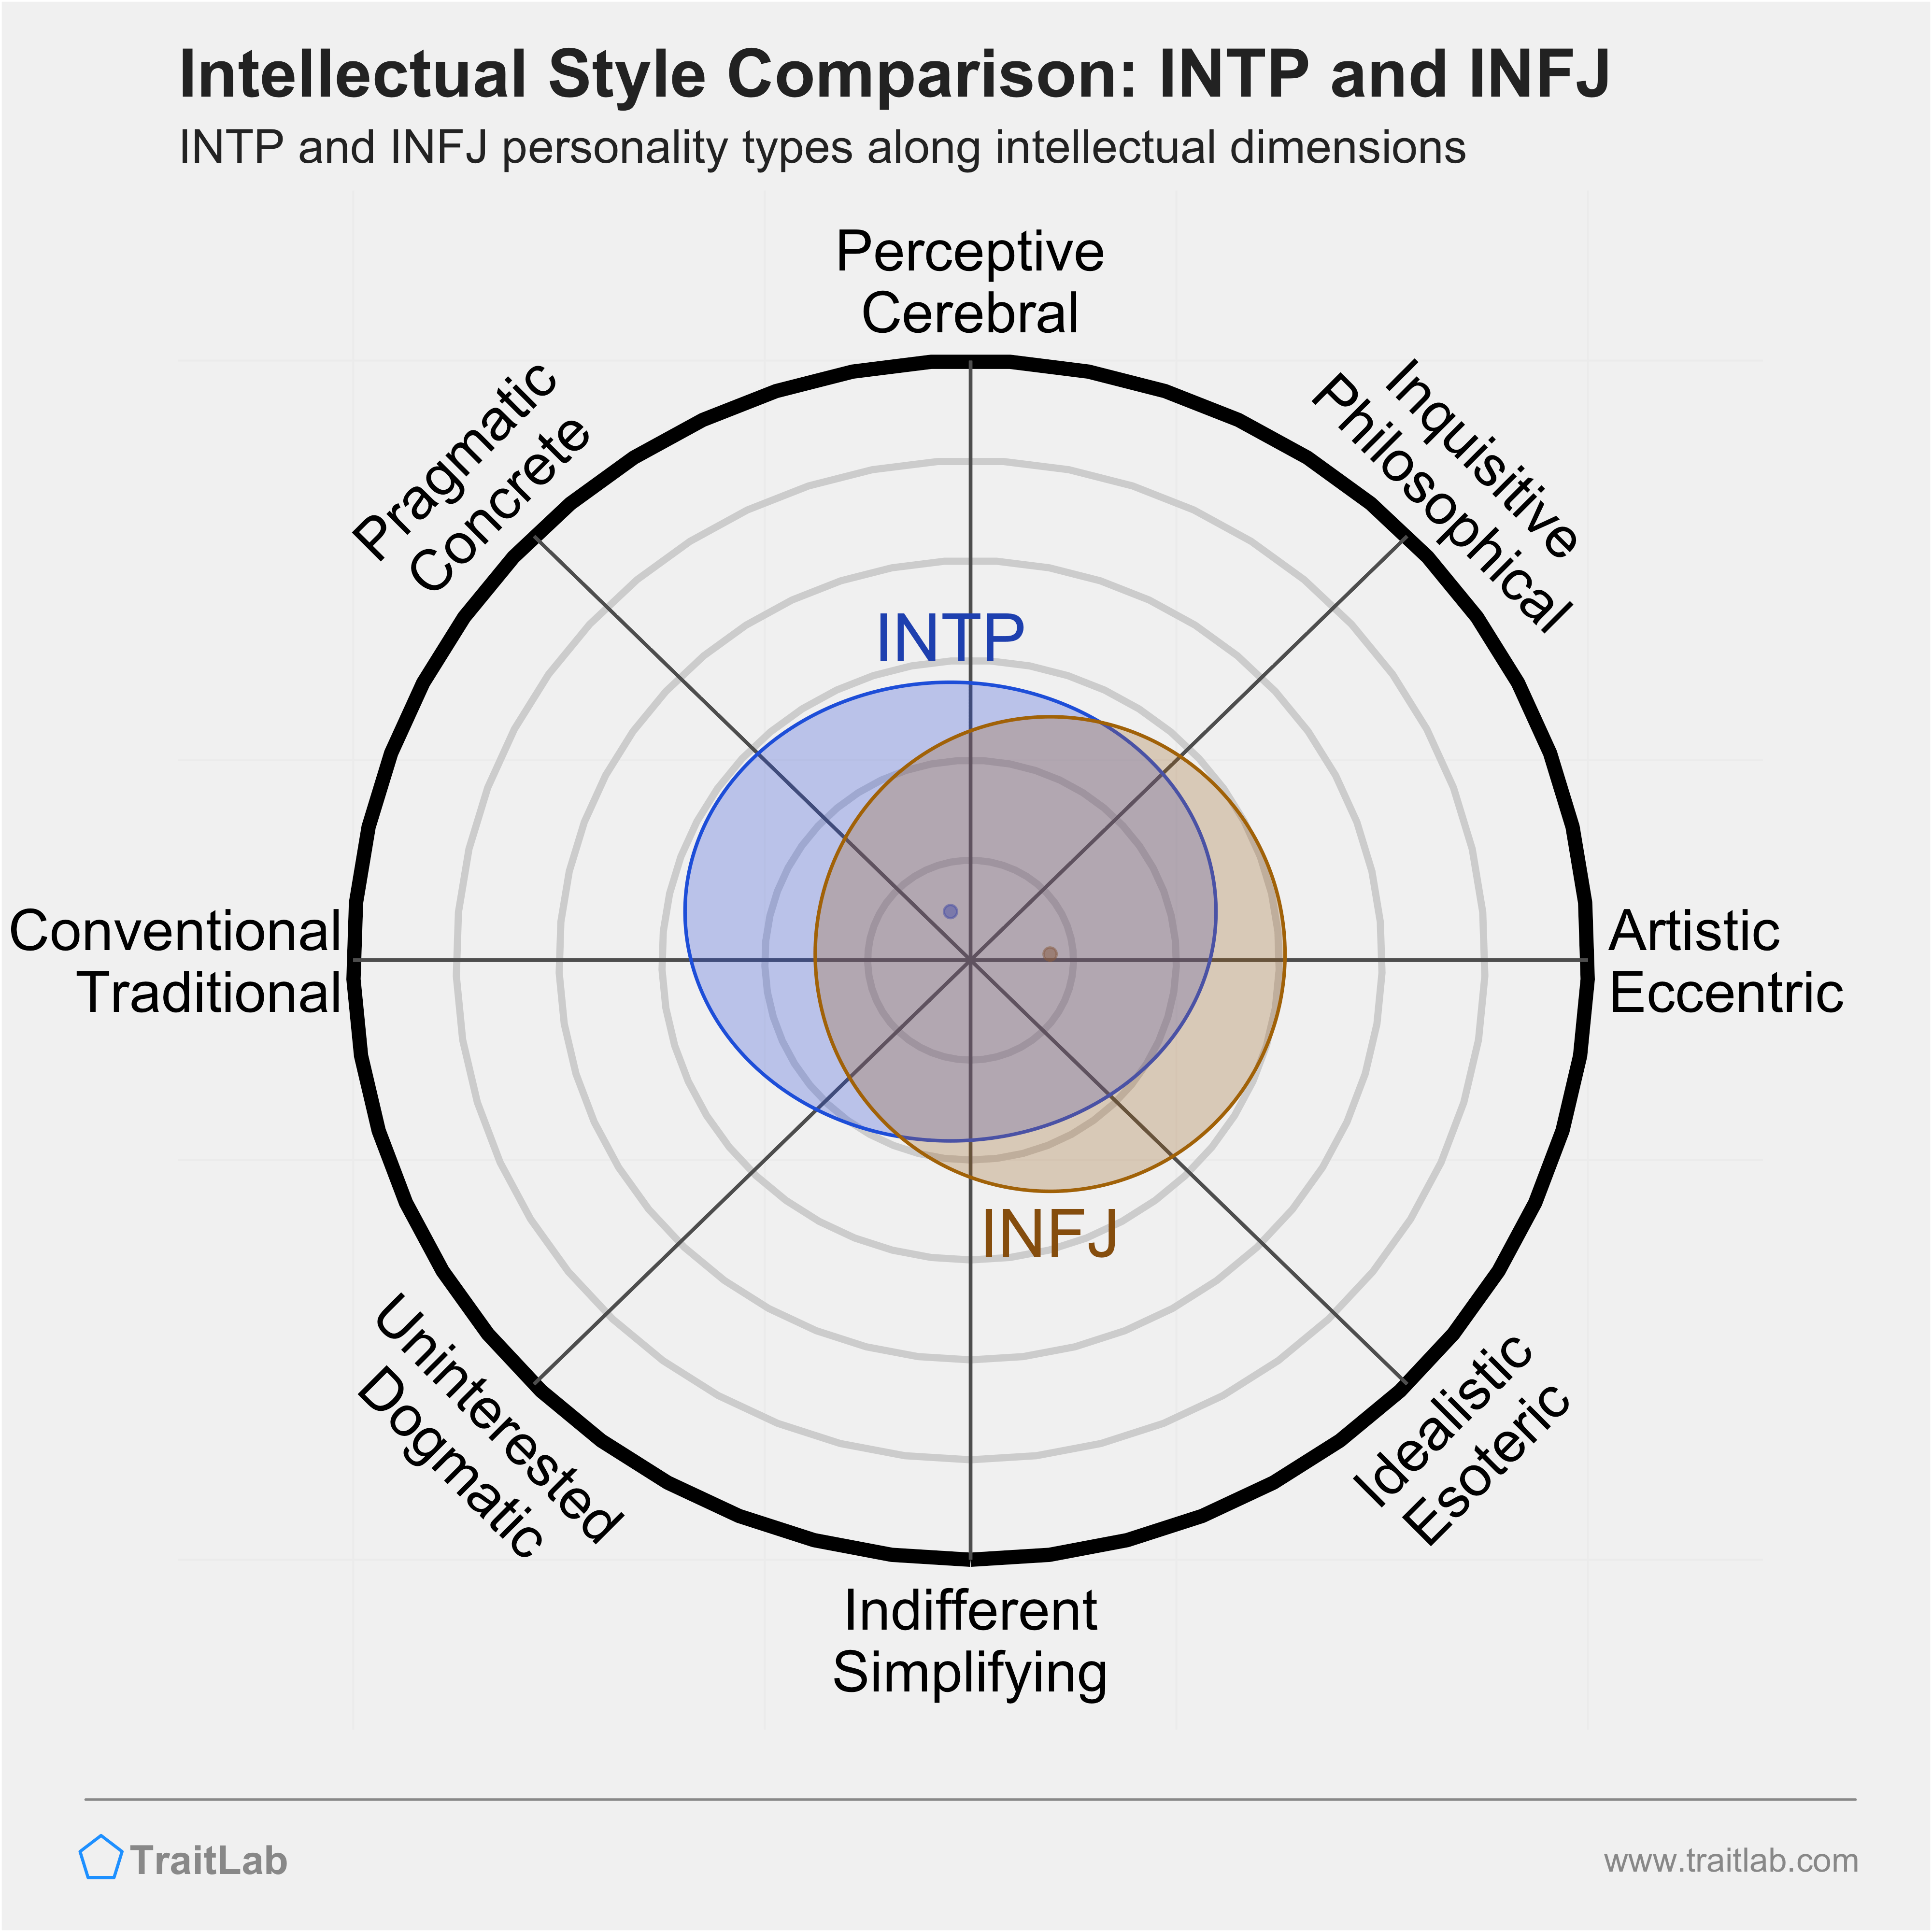 INTP and INFJ comparison across intellectual dimensions